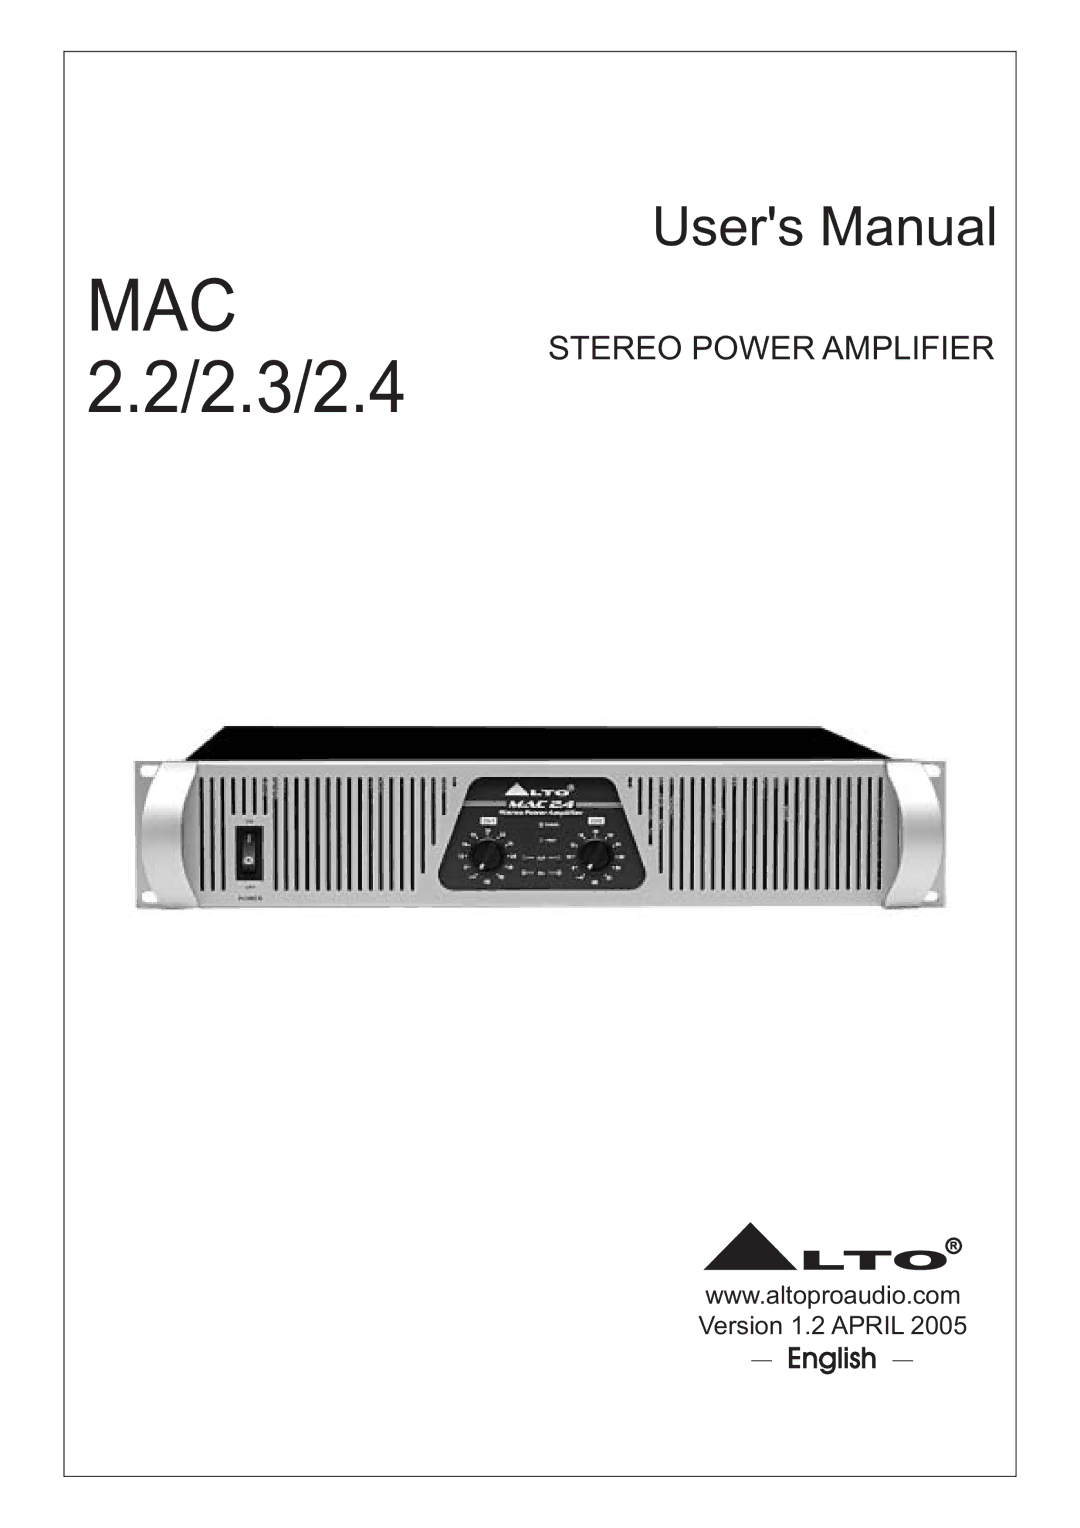 Nilfisk-ALTO MAC 2.3, MAC 2.4 user manual MAC 2.2/2.3/2.4 